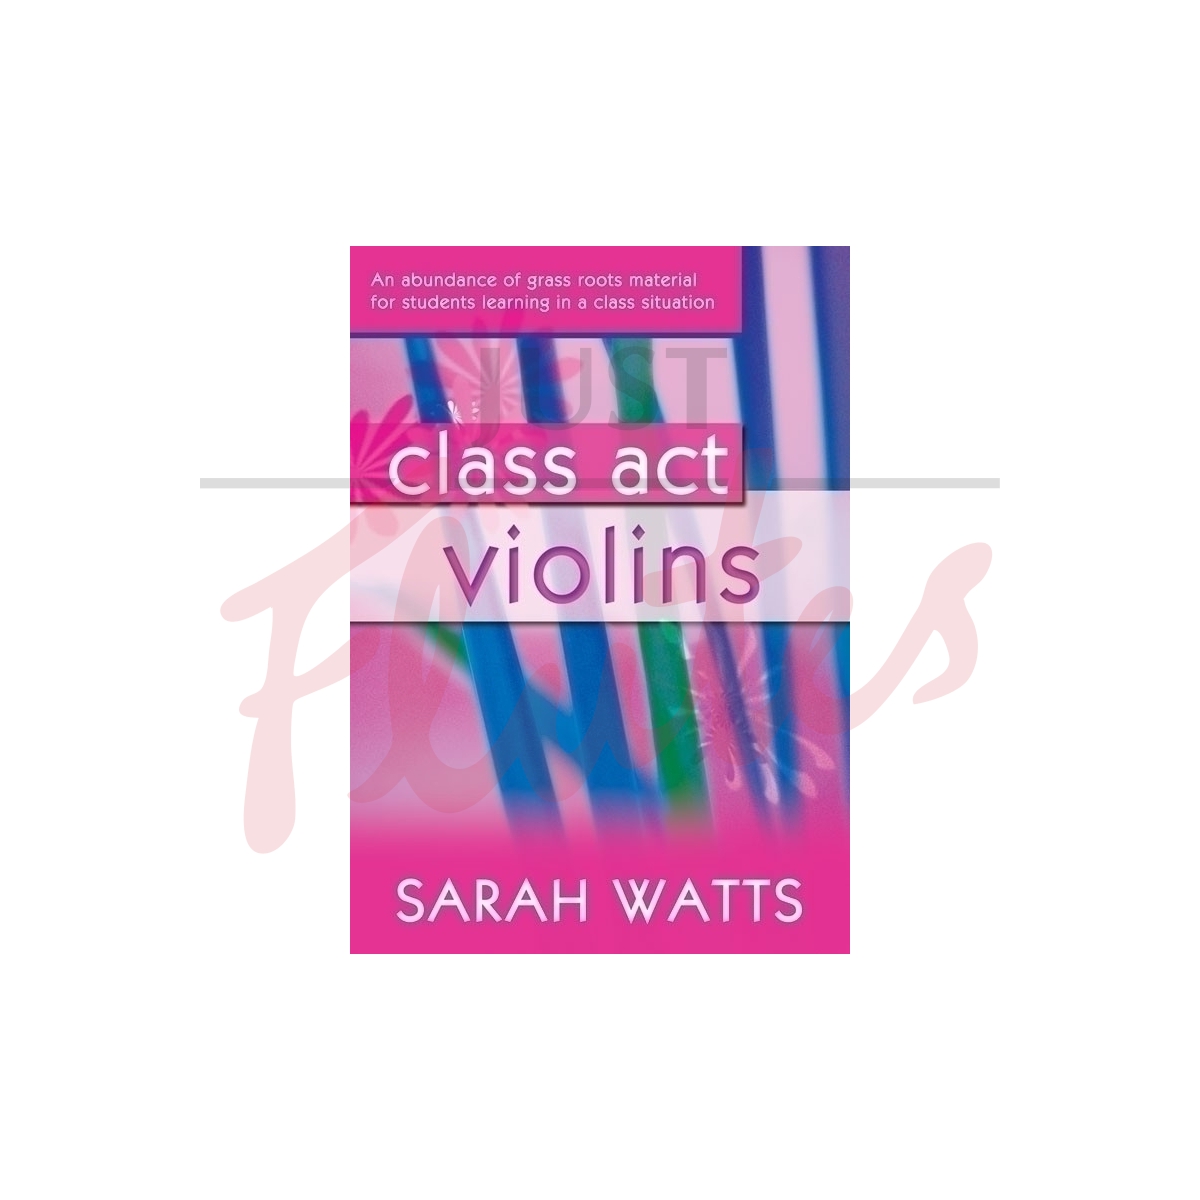 Class Act Violins [Pupil's Book]